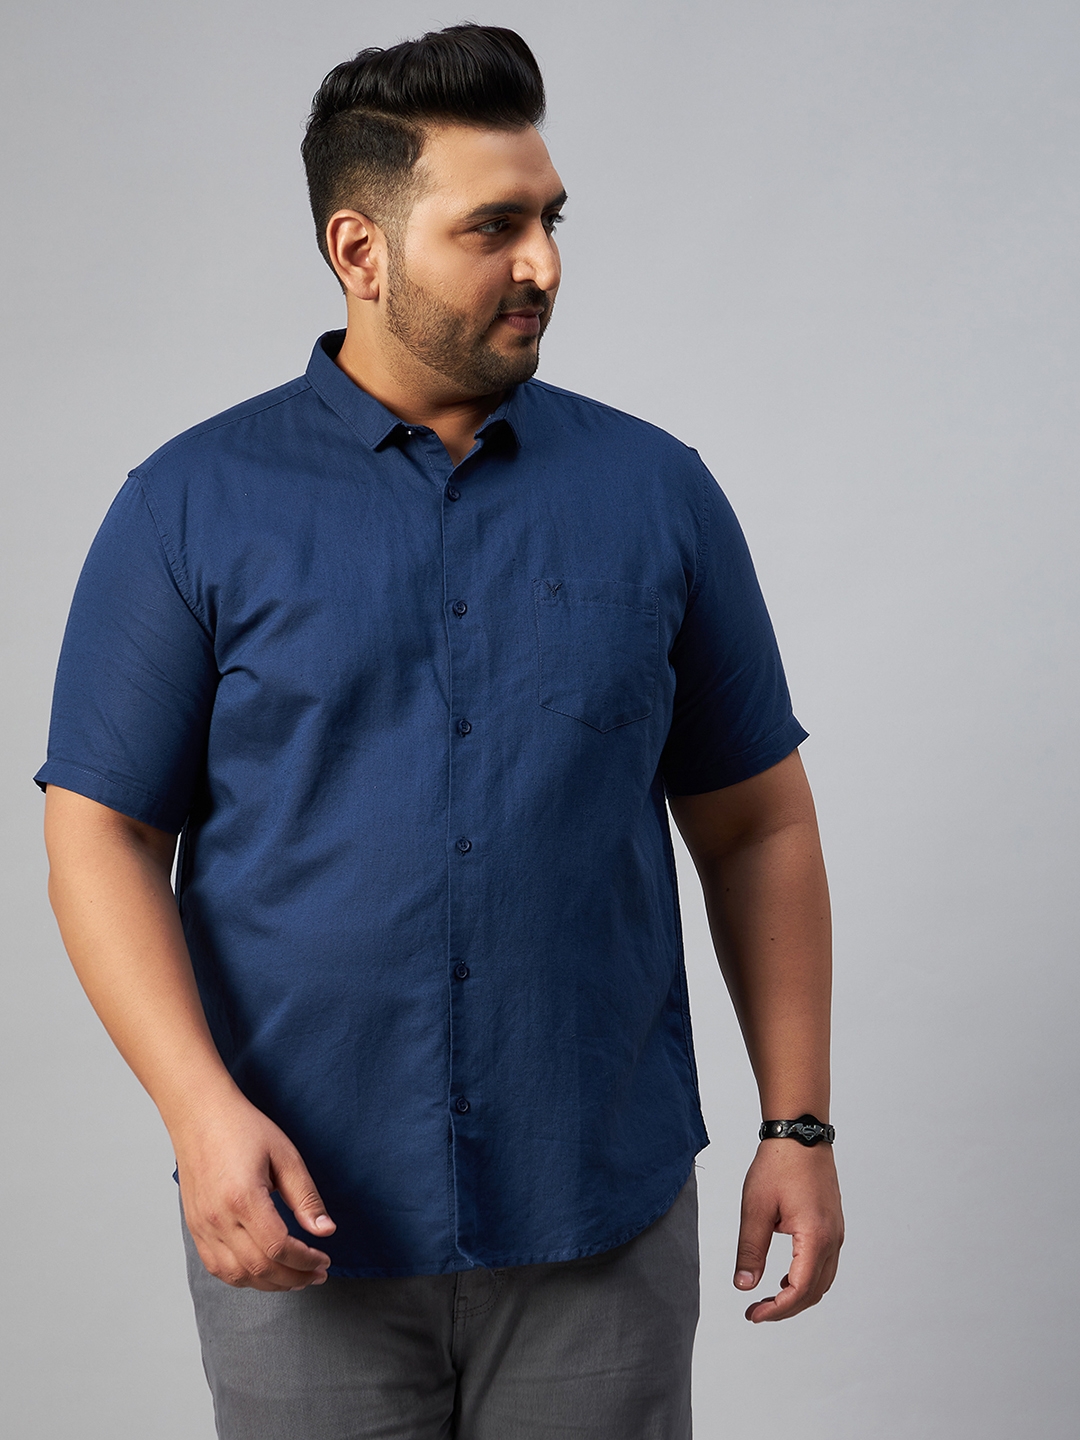 SHOWOFF Plus Men's Comfort Fit Linen Navy Blue Solid Shirt